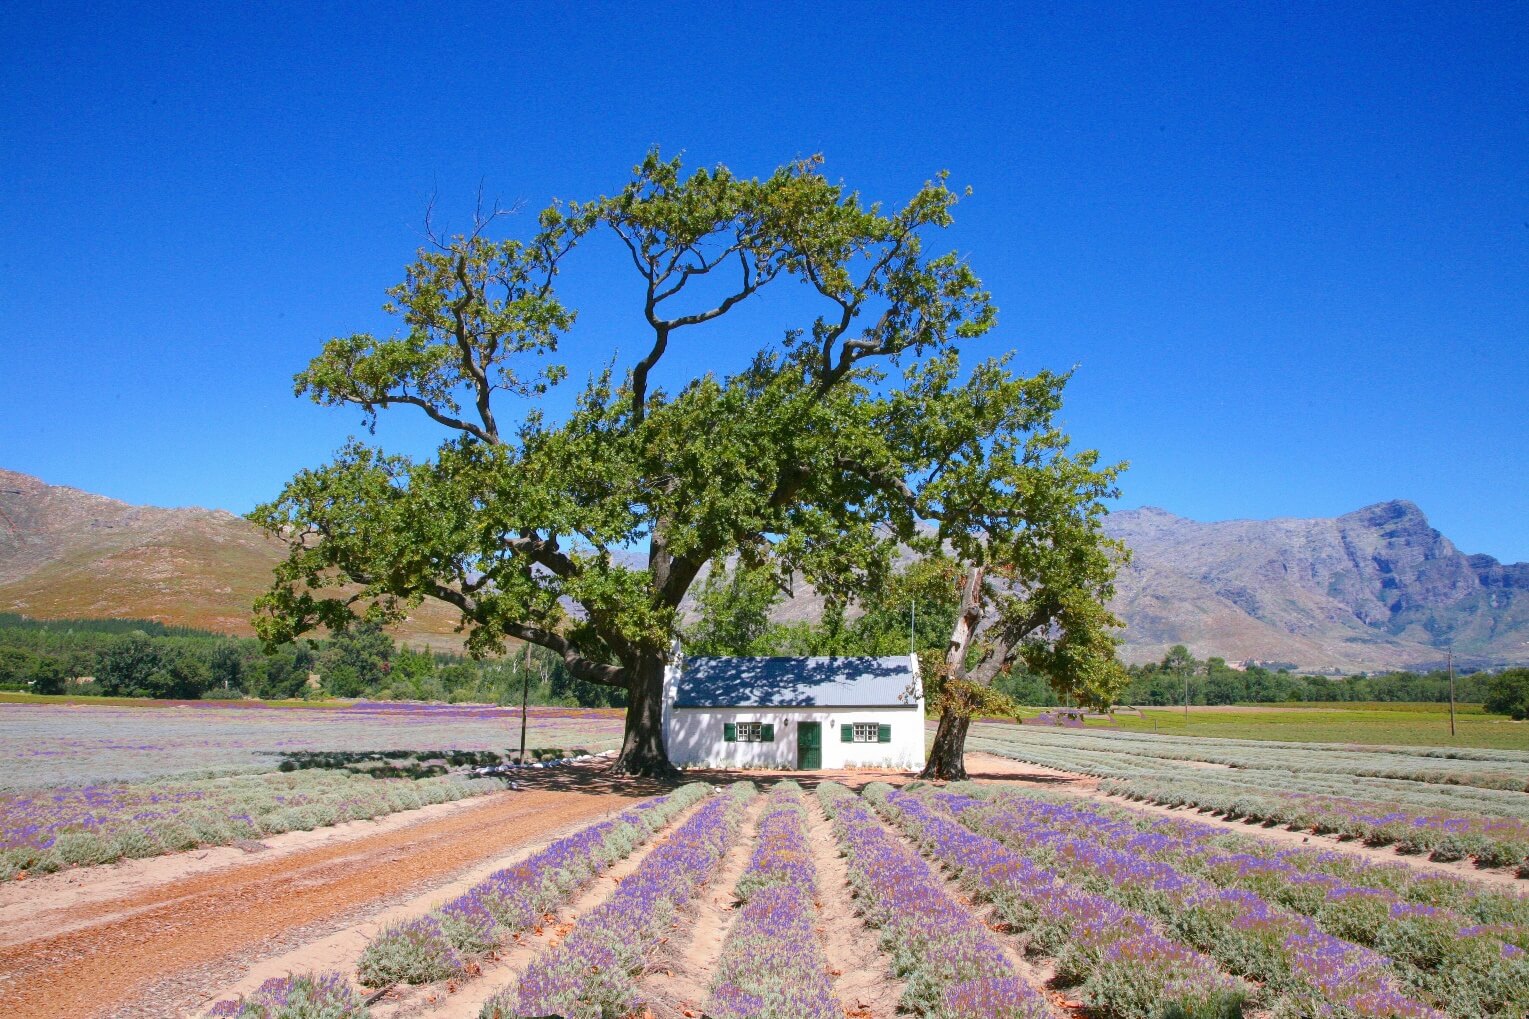 Lavendel velden Stellenbosch zuid afrika route